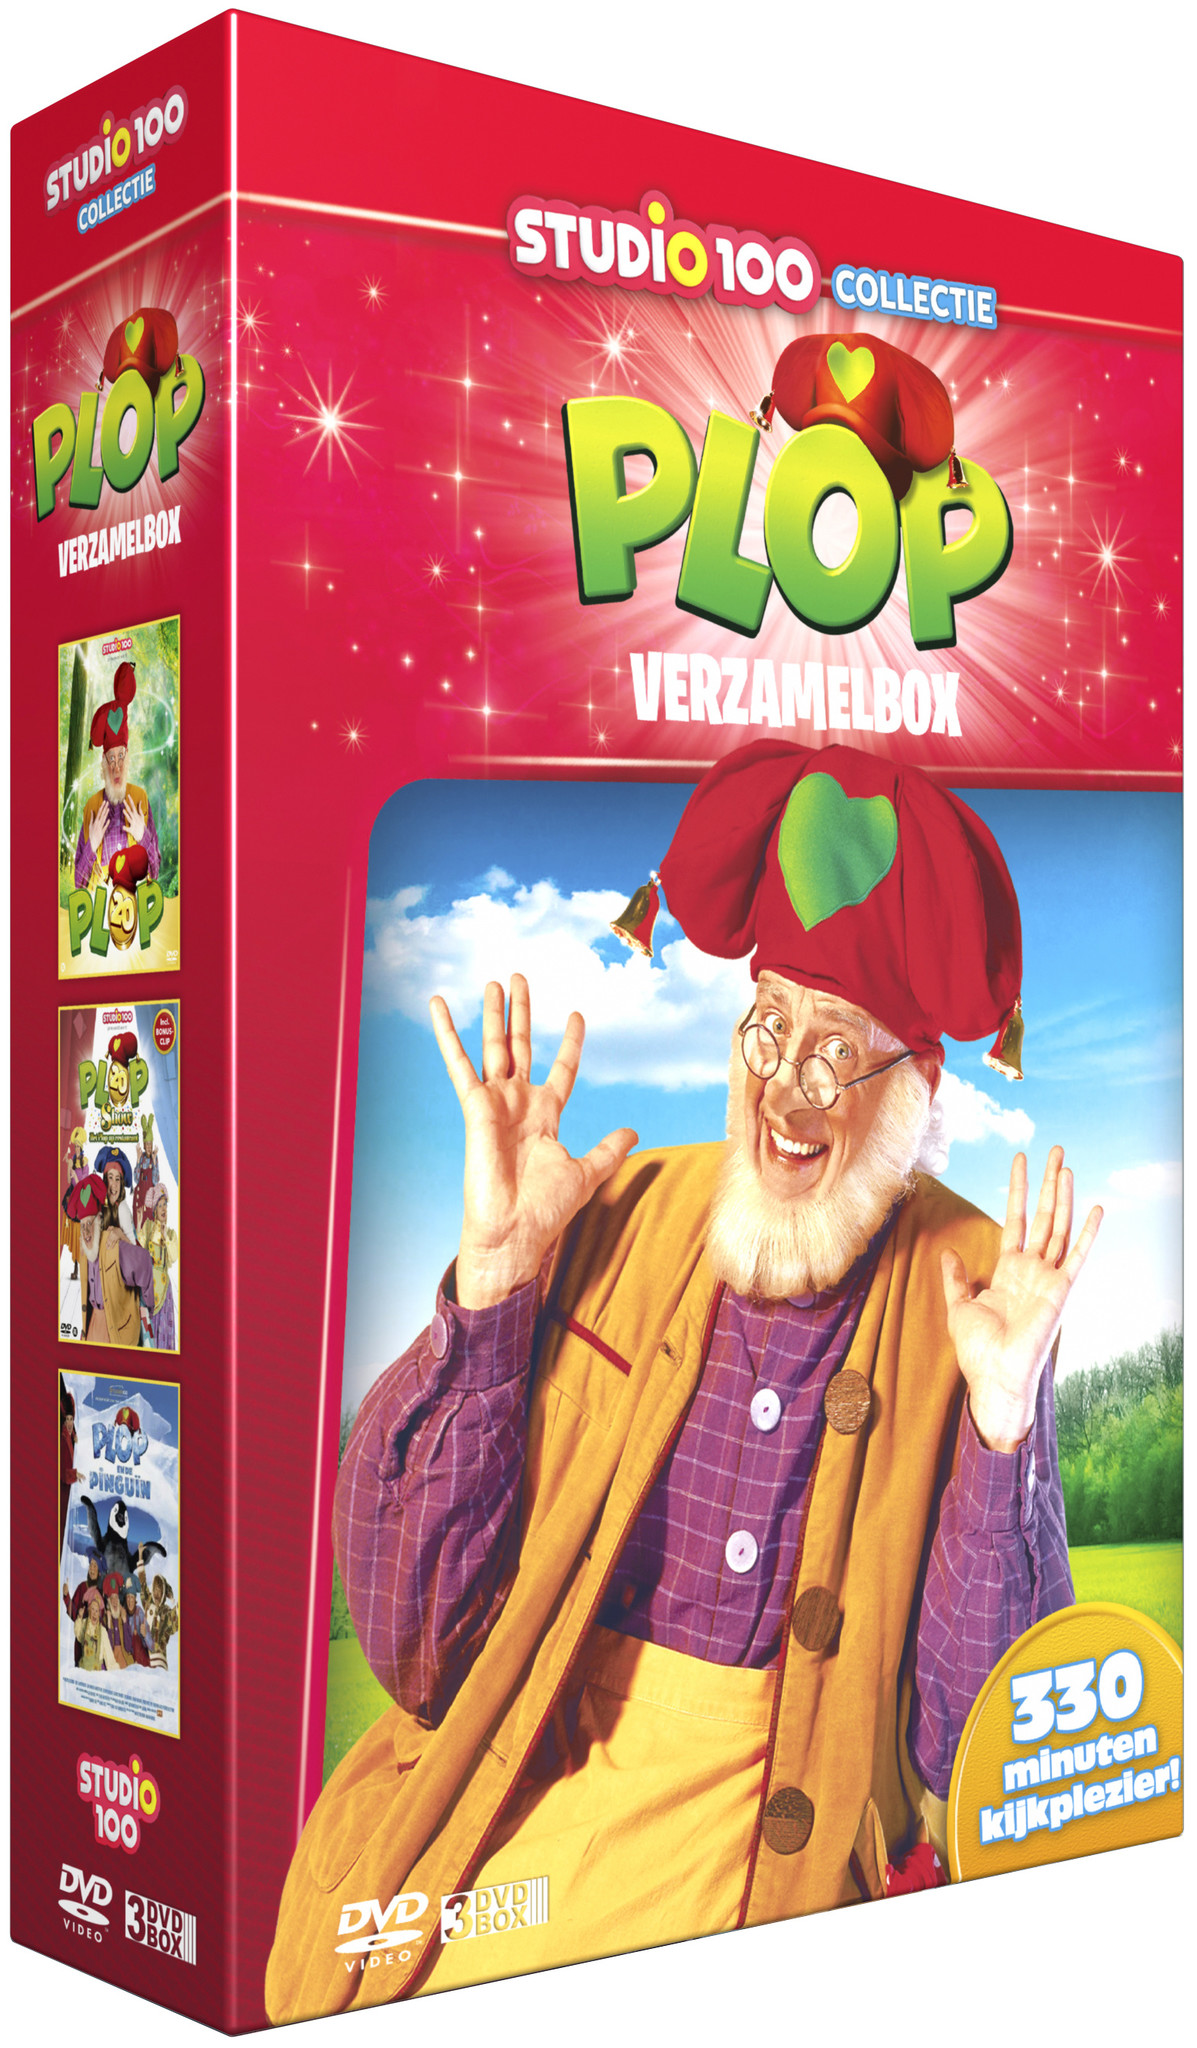 Kabouter Plop DVD Box Plop Film Show Studio 100 Webshop